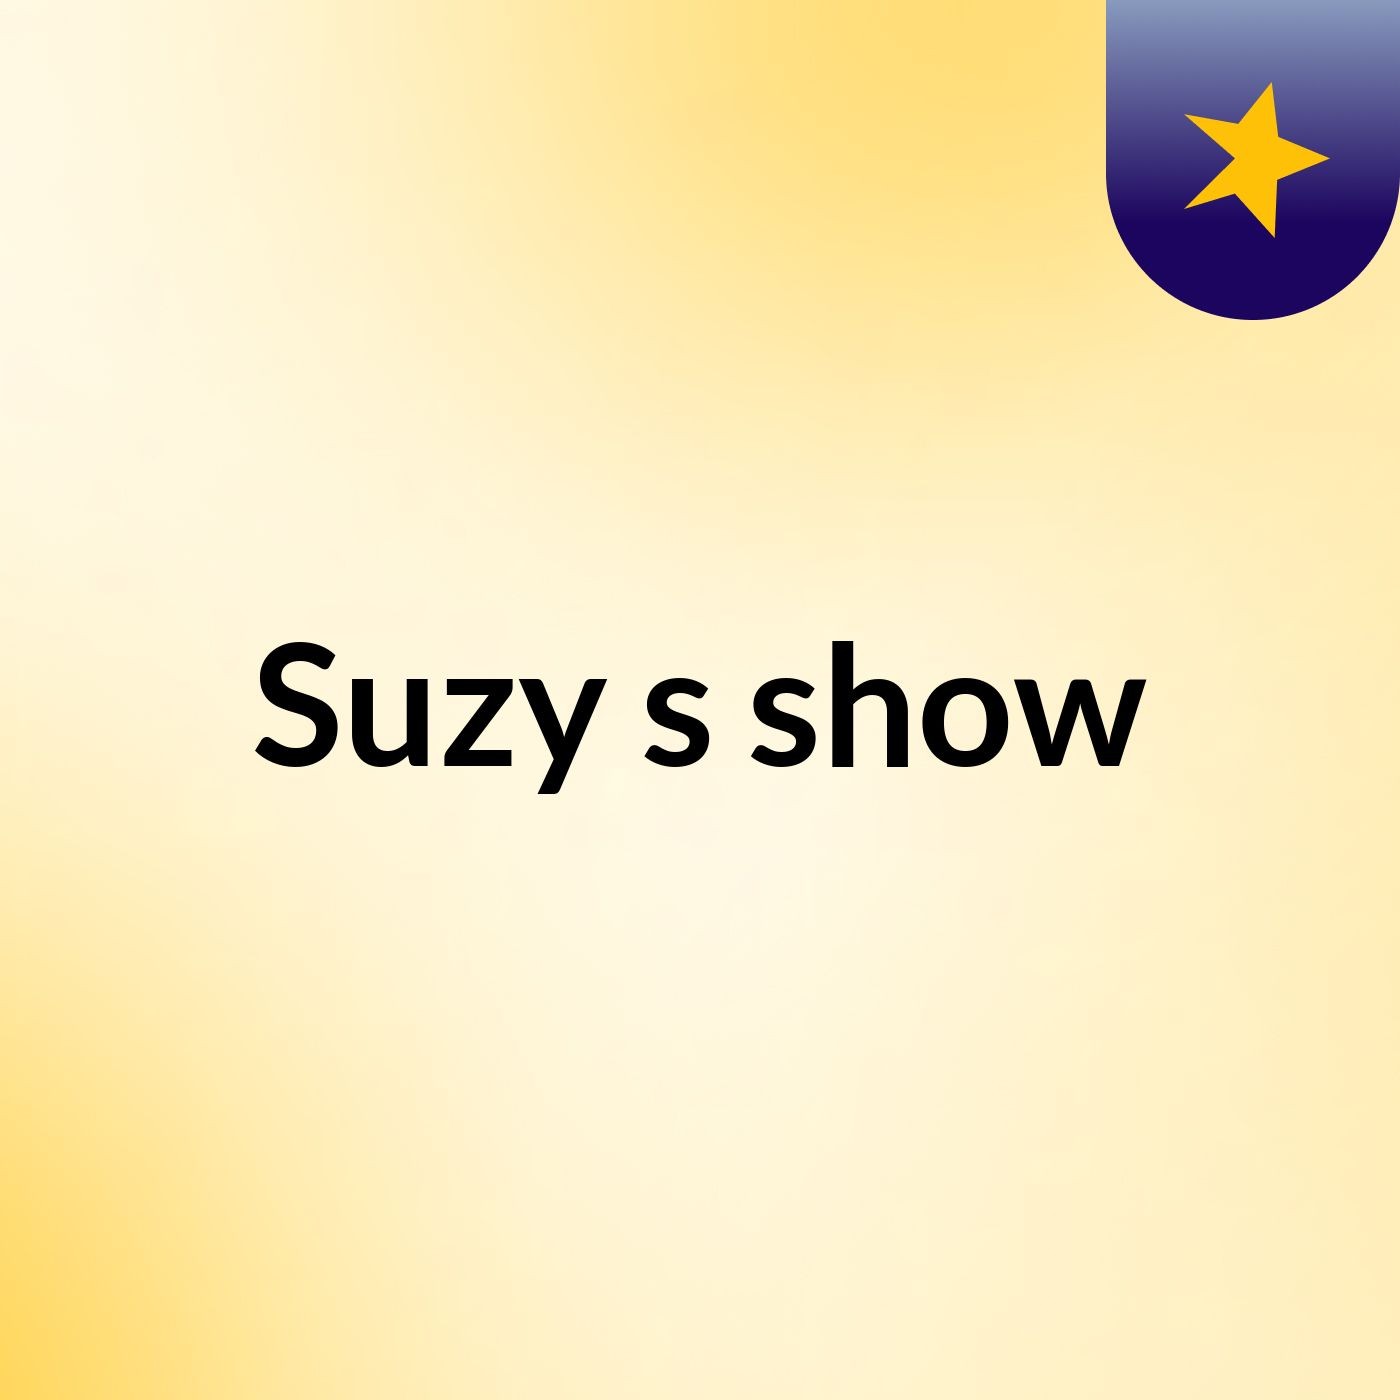 Suzy's show